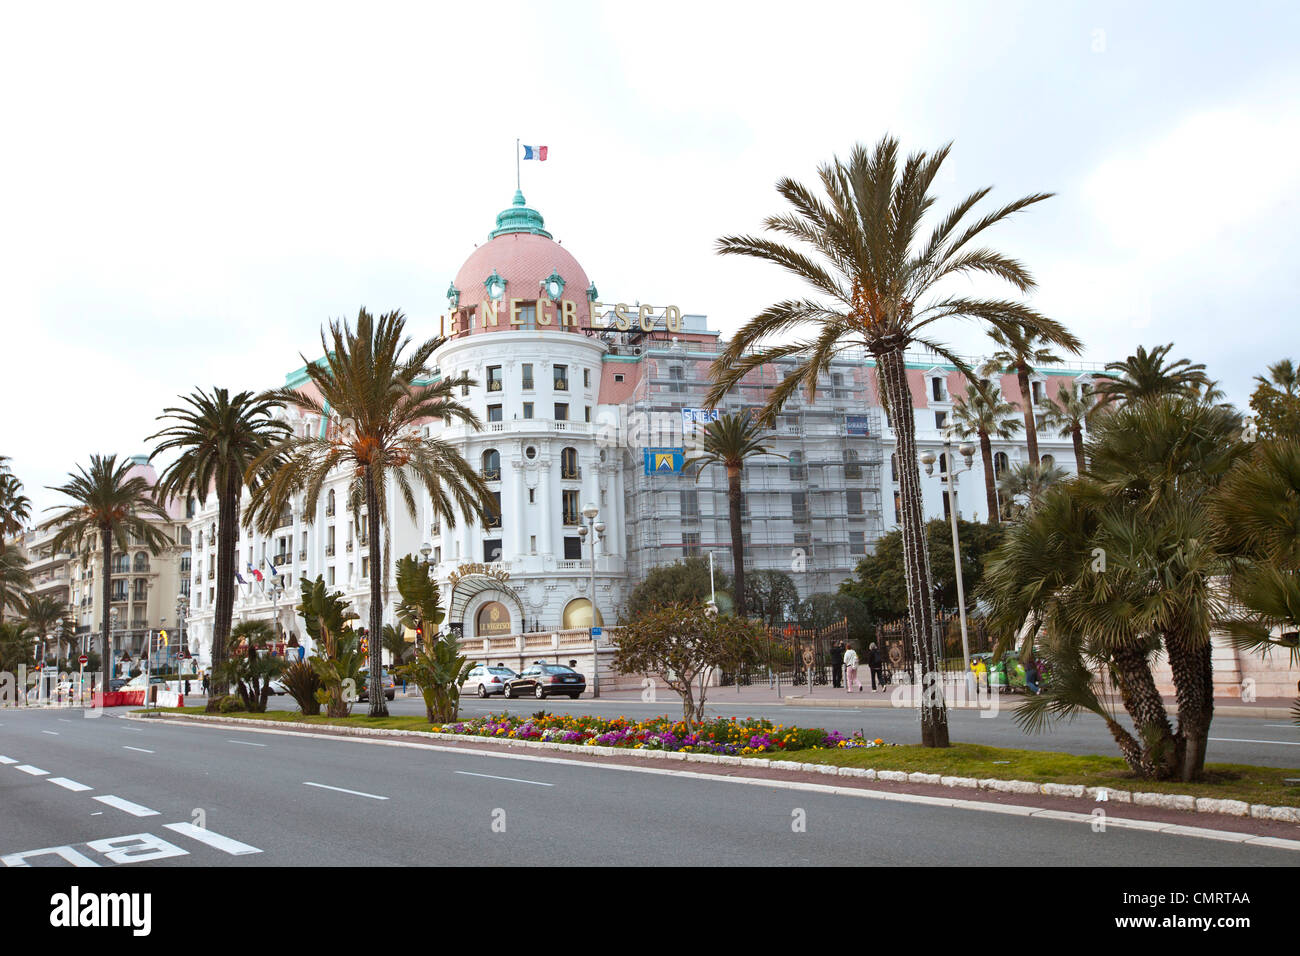 The Hotel Negresco Nice France. Entrance, Promenade des Anglais. French luxurios hotel. 124684 Nice Negresco Stock Photo